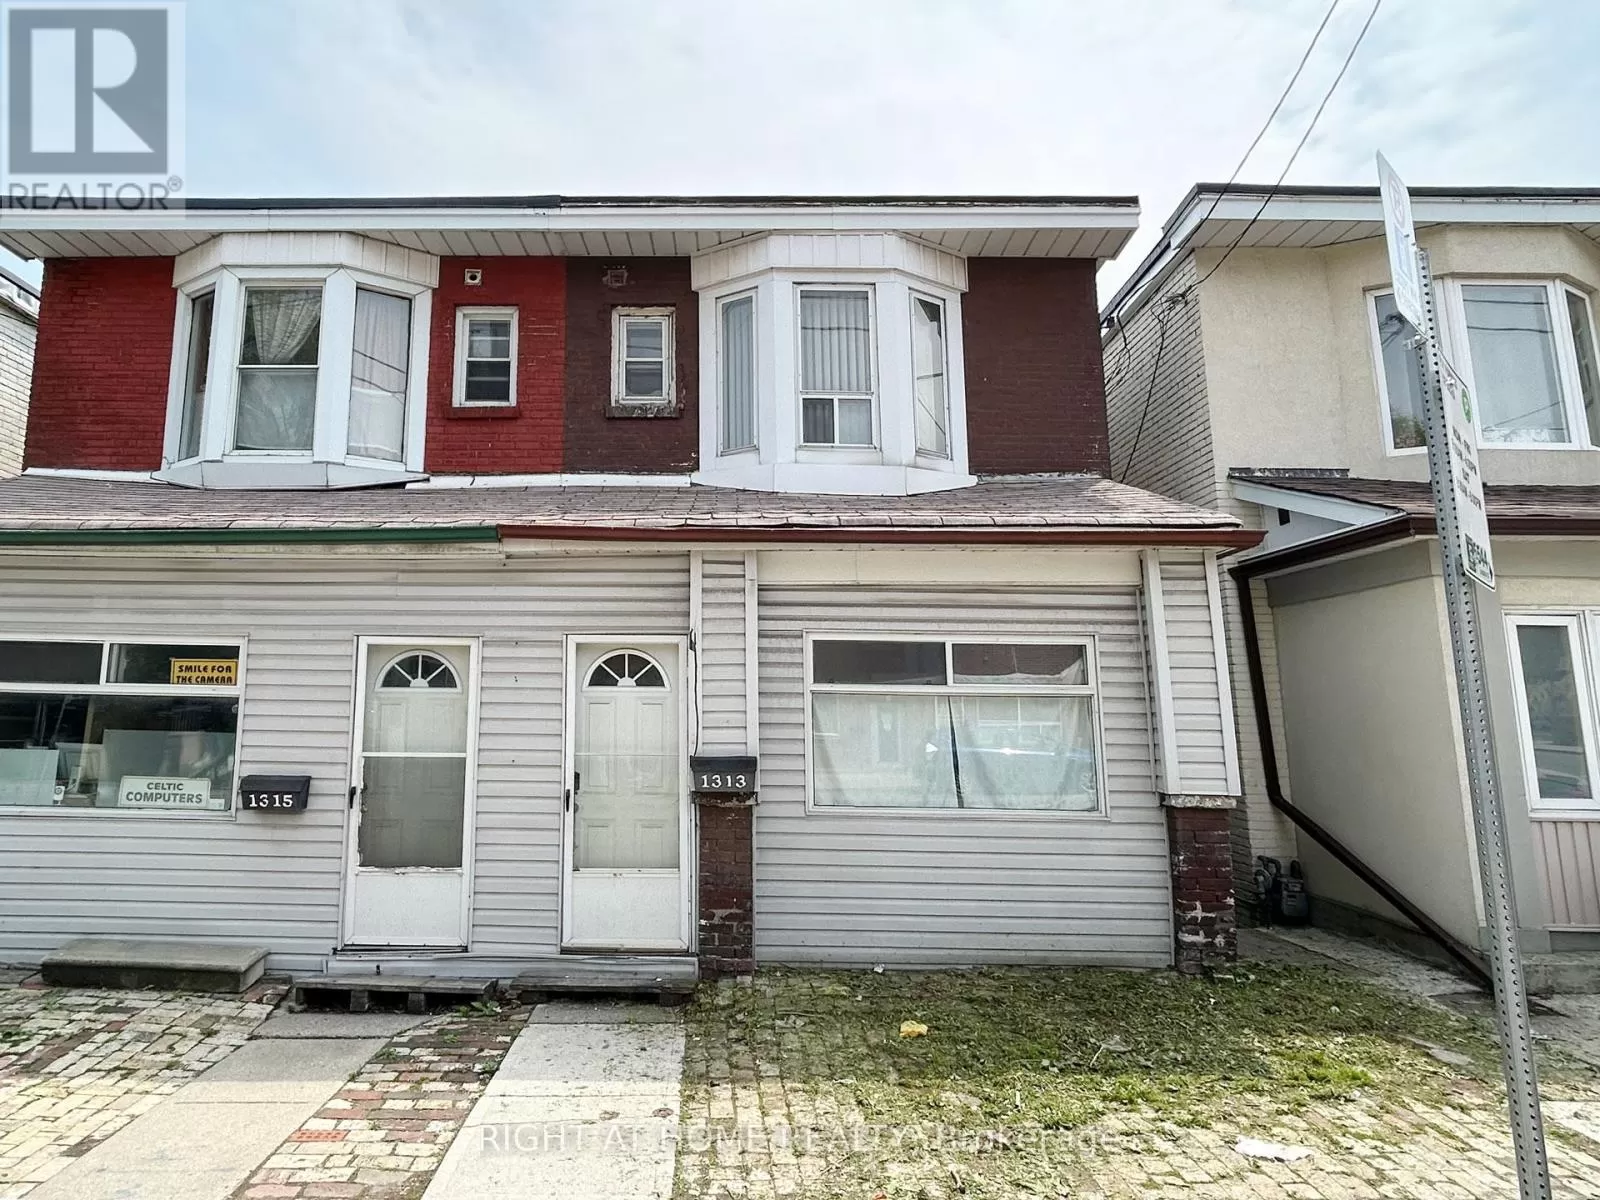 House for rent: 1313 Gerrard Street E, Toronto, Ontario M4L 1Y8